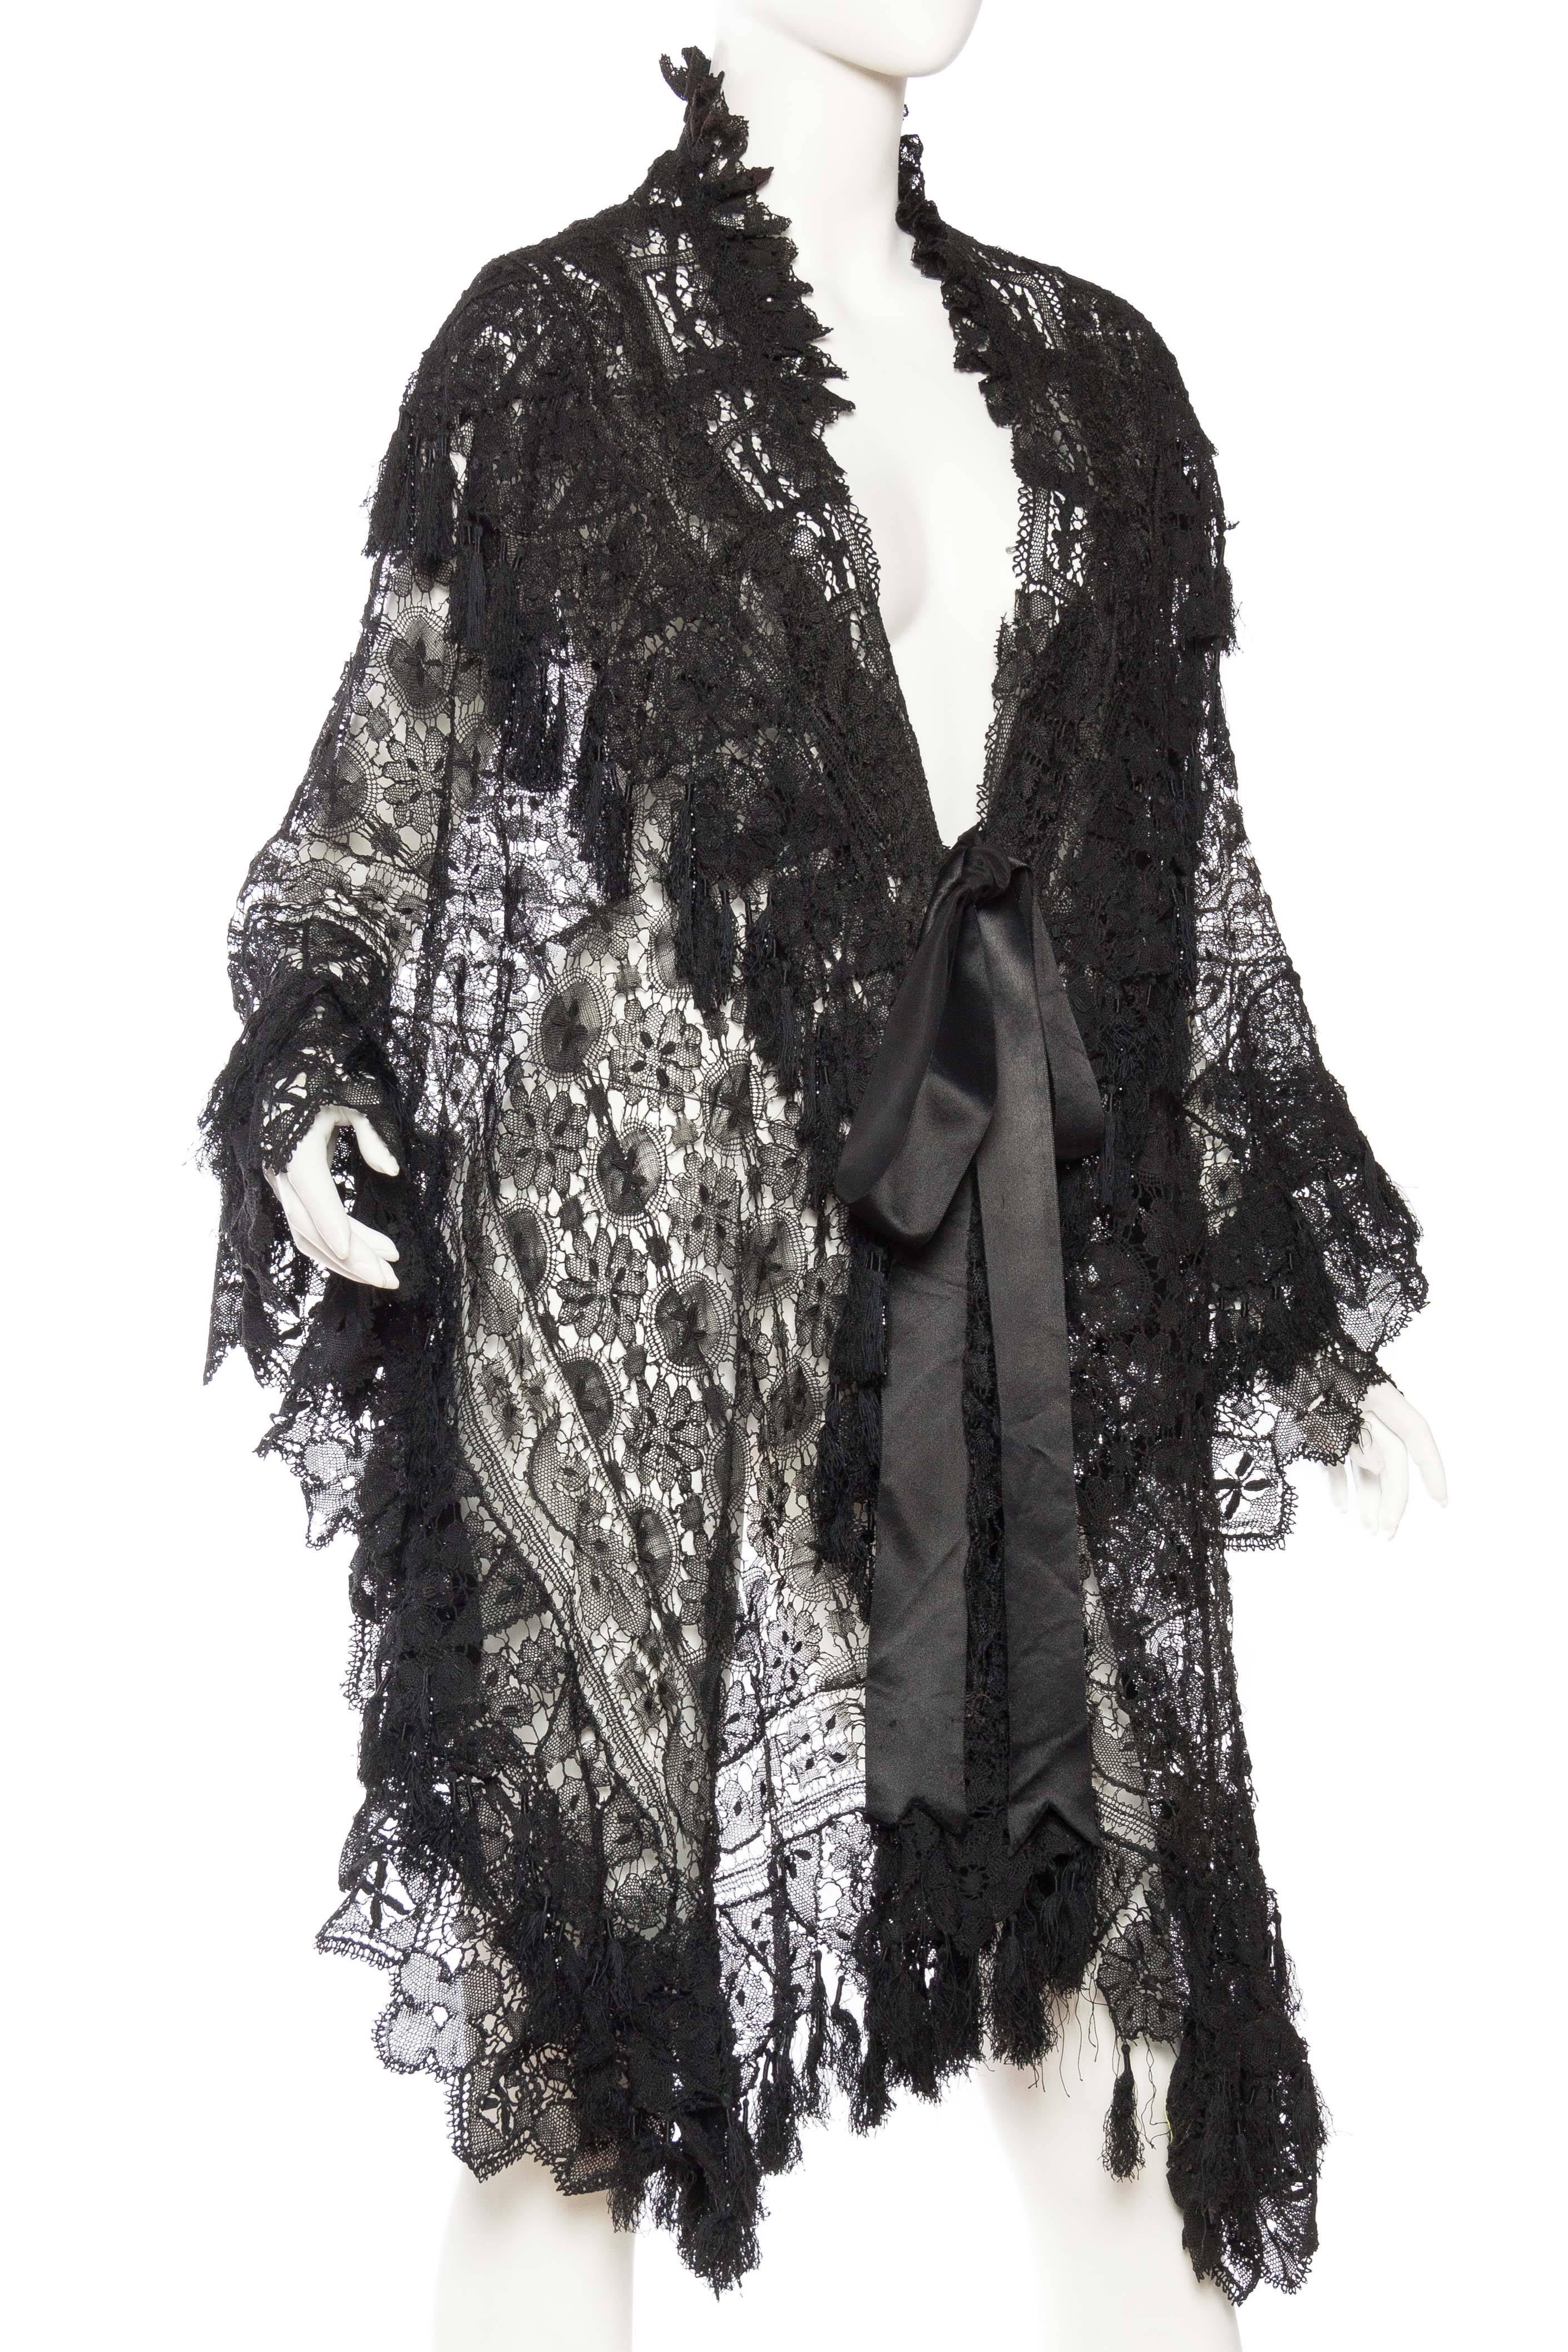 Women's Victorian Black Silk Handmade Lace Dolman Style Fringed Cape From Paris